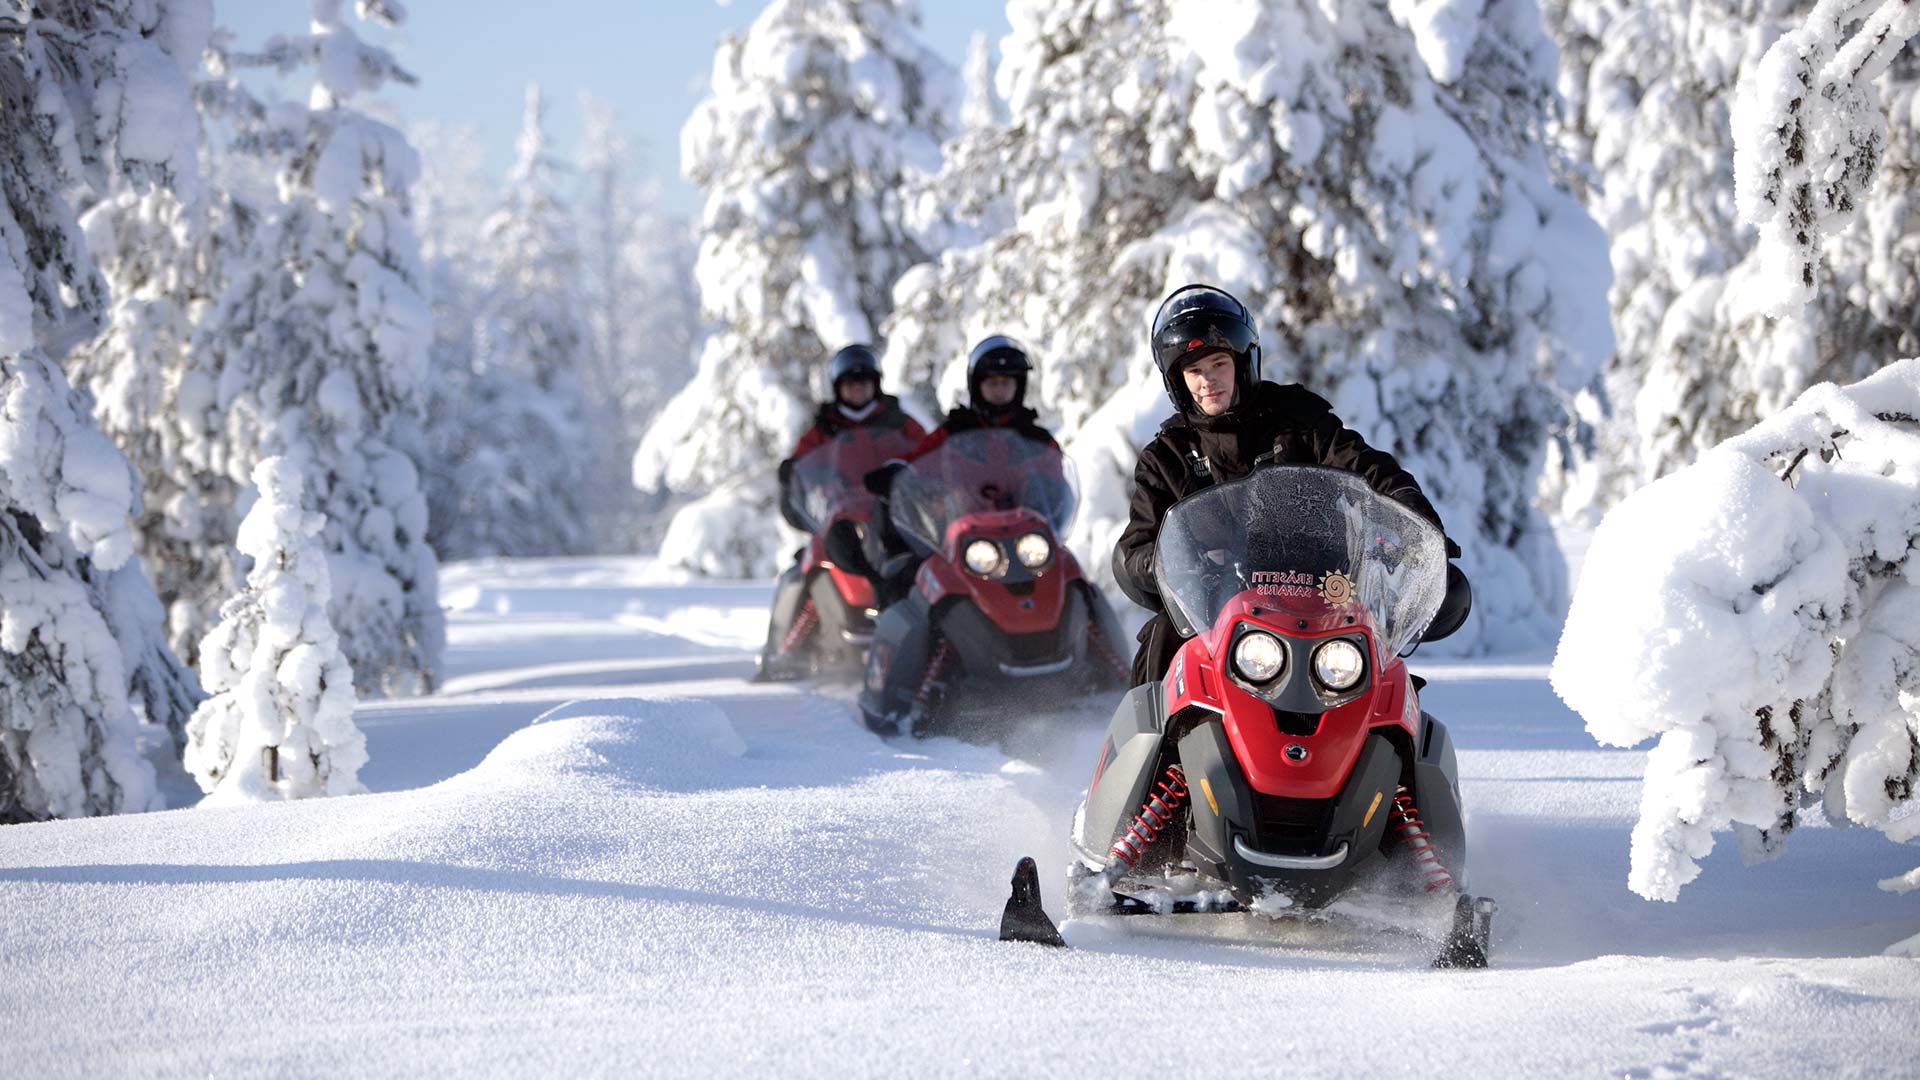 Lapland Snowmobiling tours : Sweden & Finland safaris : Winter travel